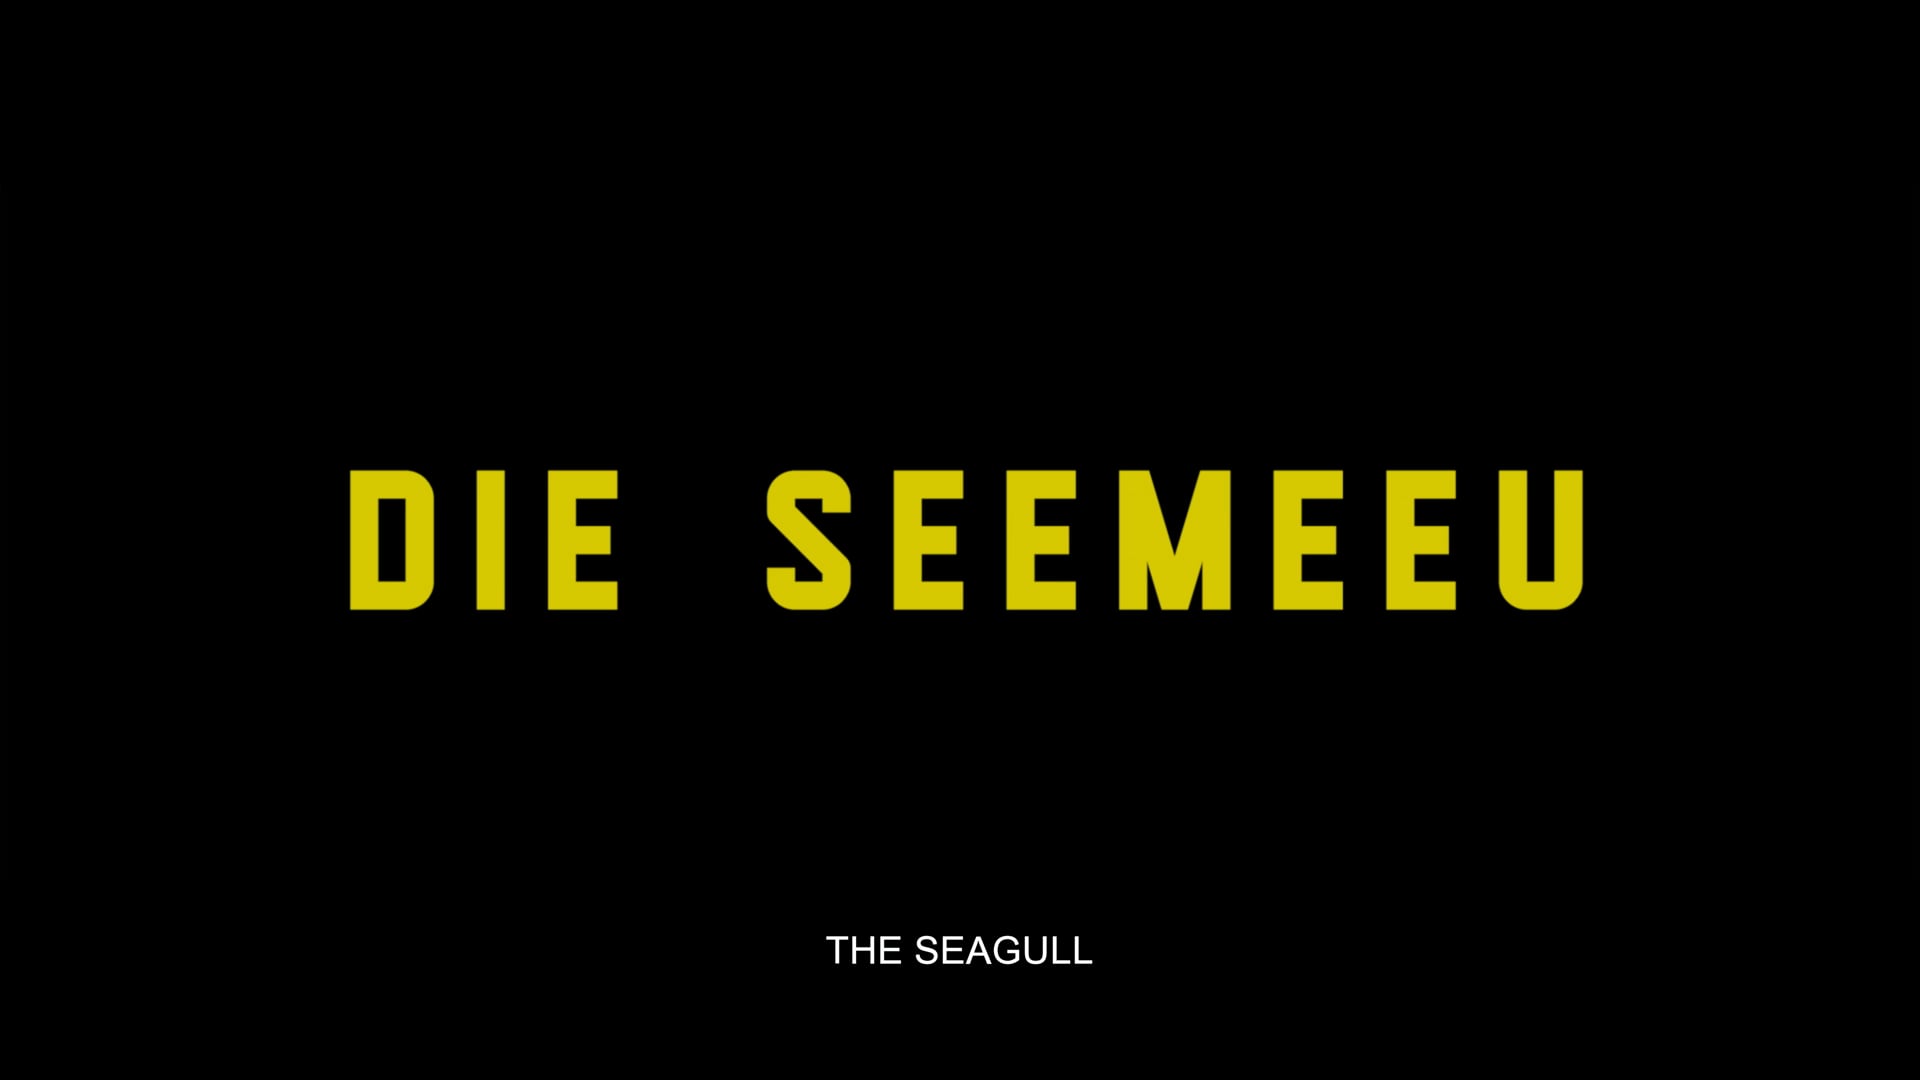 The Seagull (Trailer)